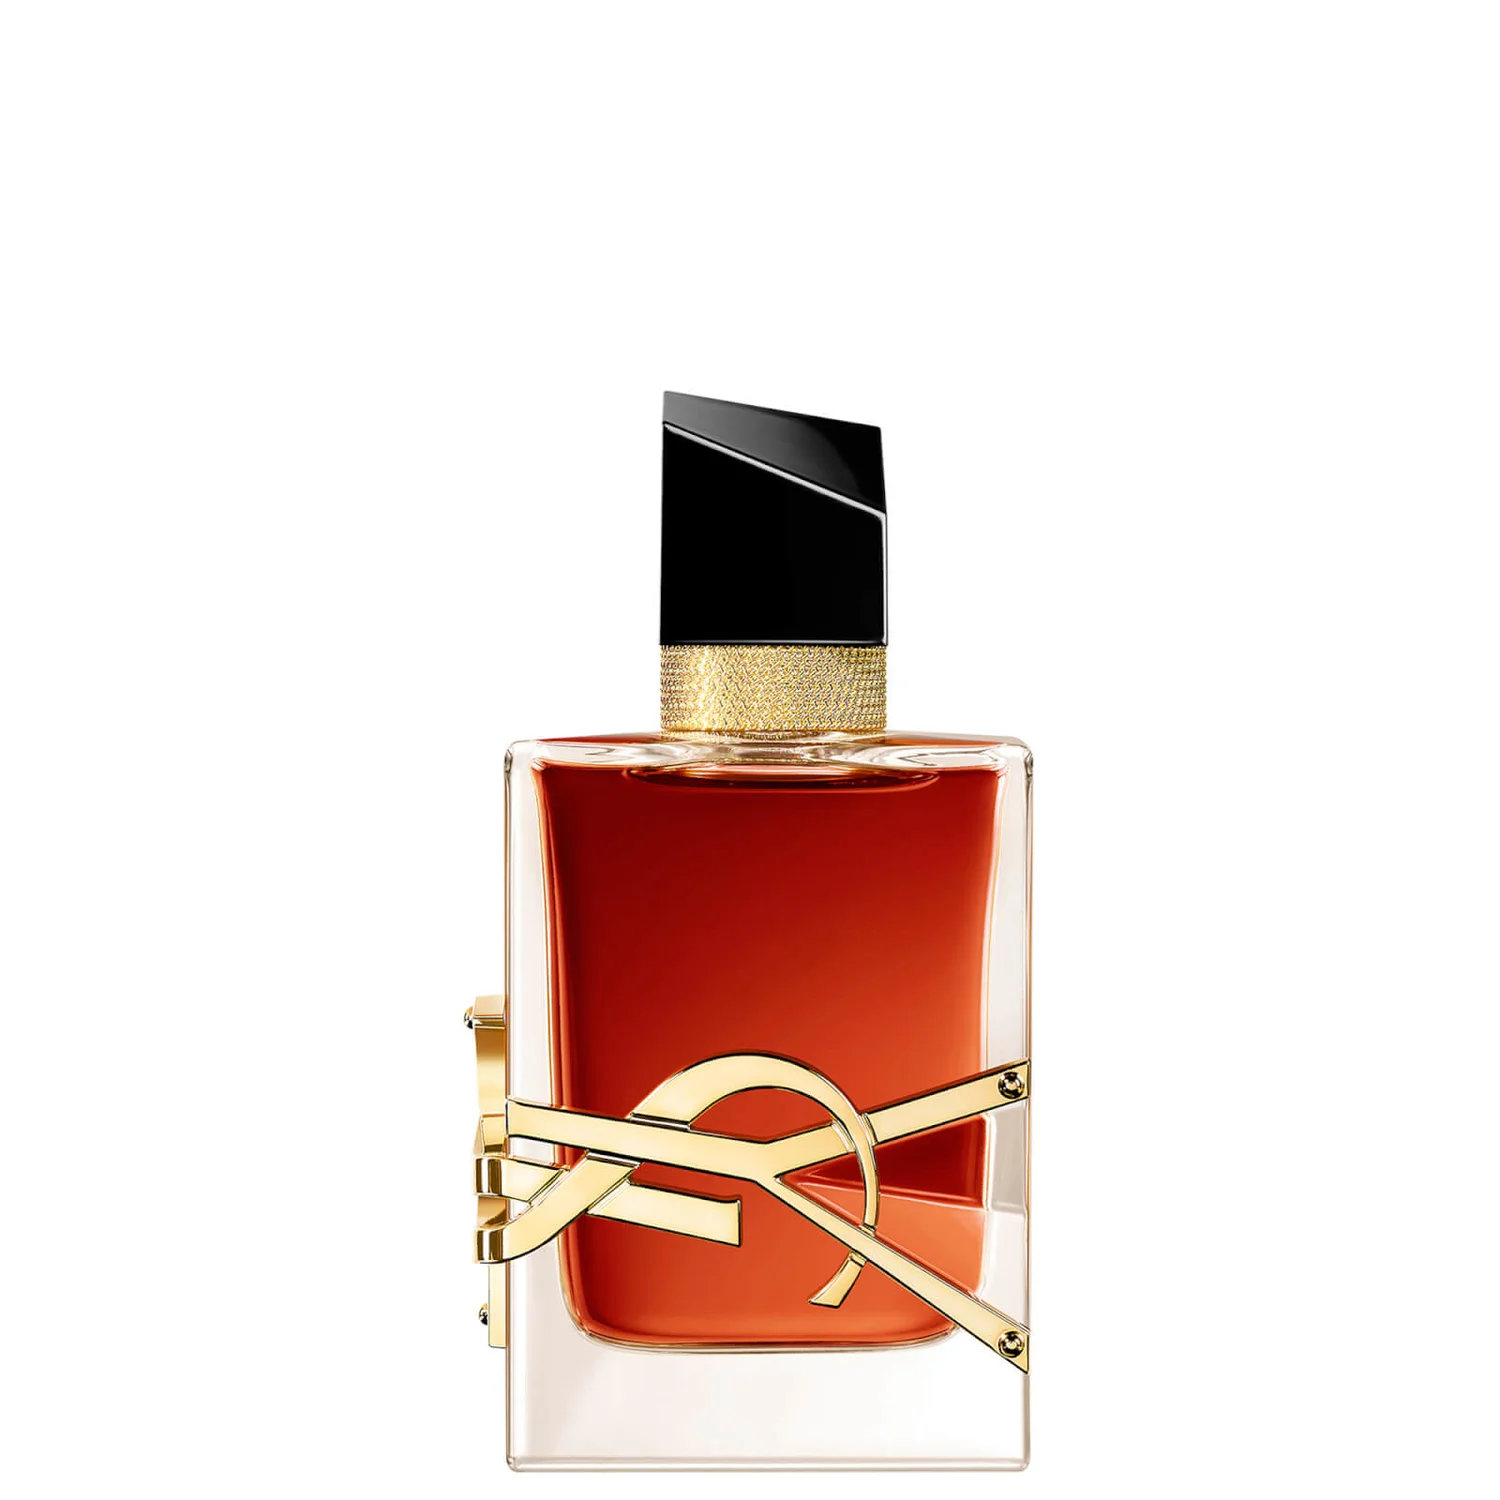 Emma Stone Is the Face of Les Parfums Louis Vuitton